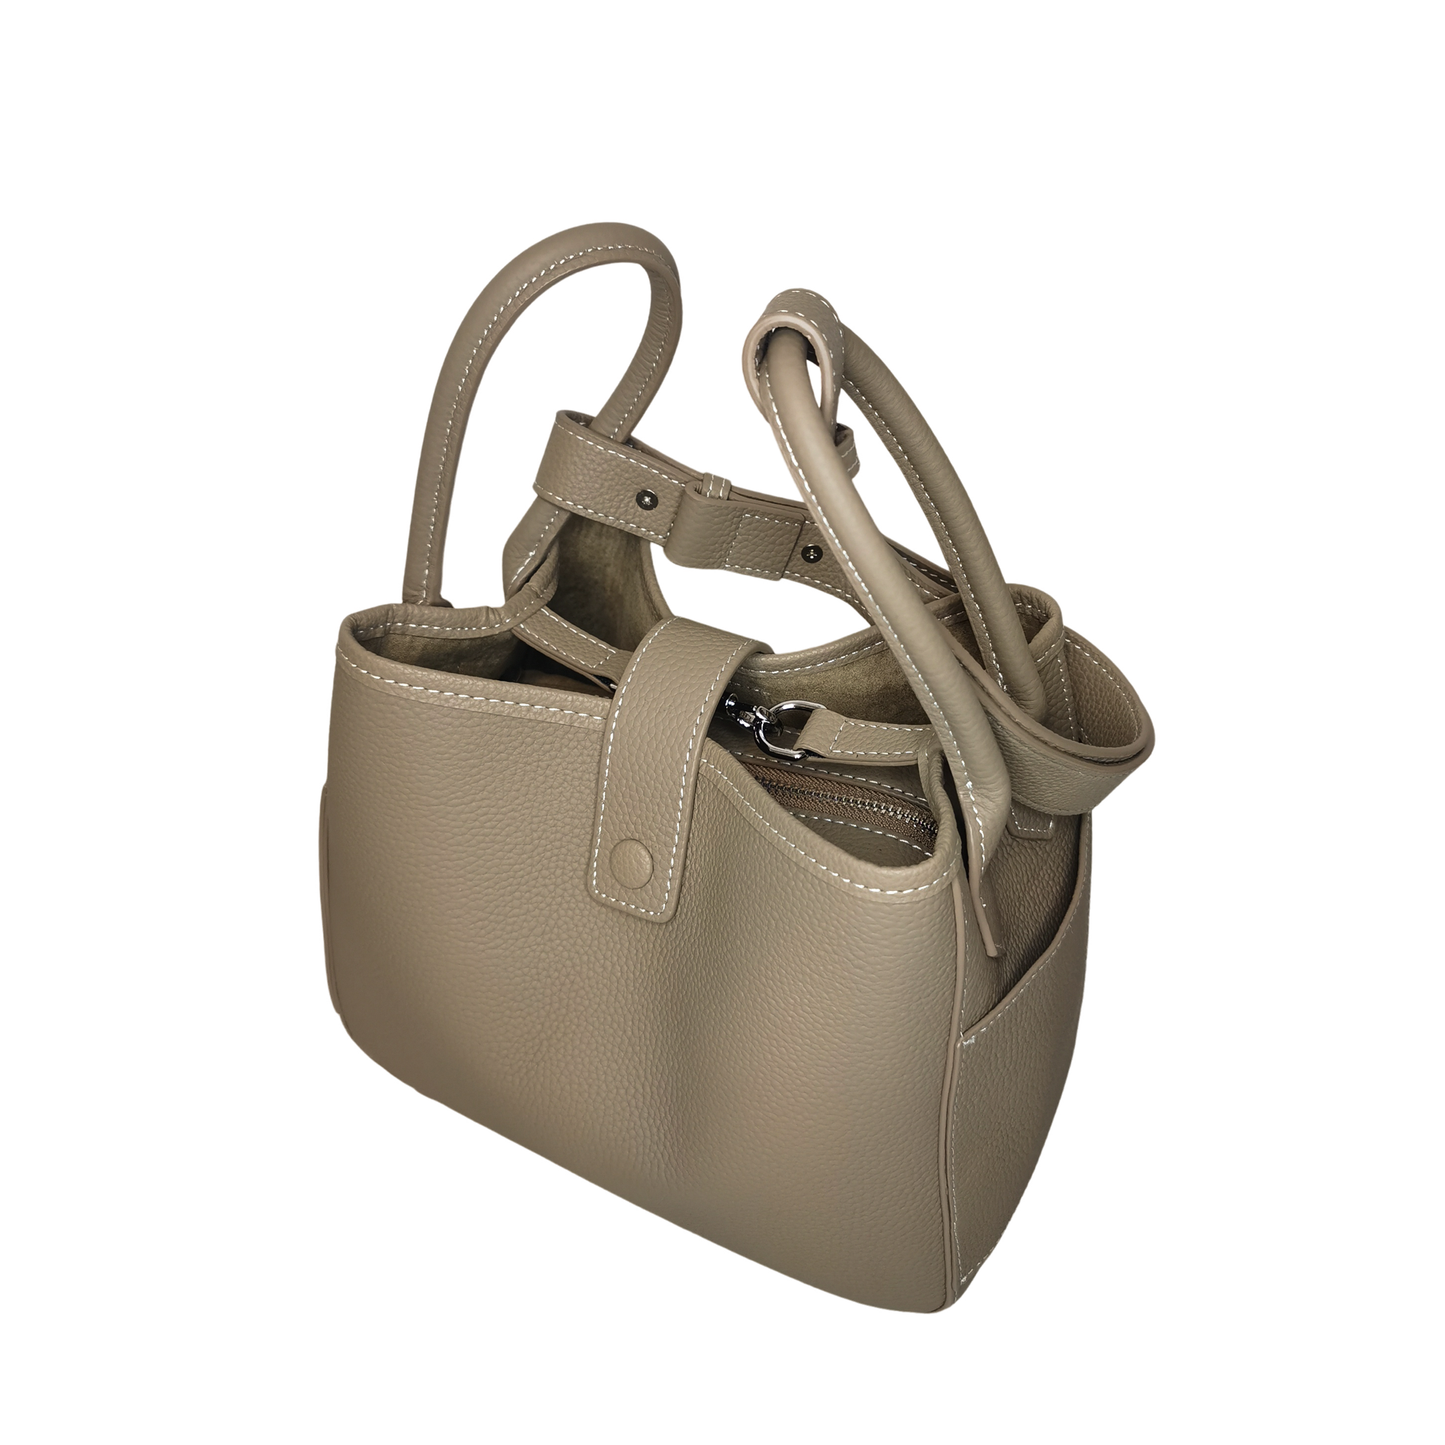 Women's genuine cowhide leather handbag Two handle design